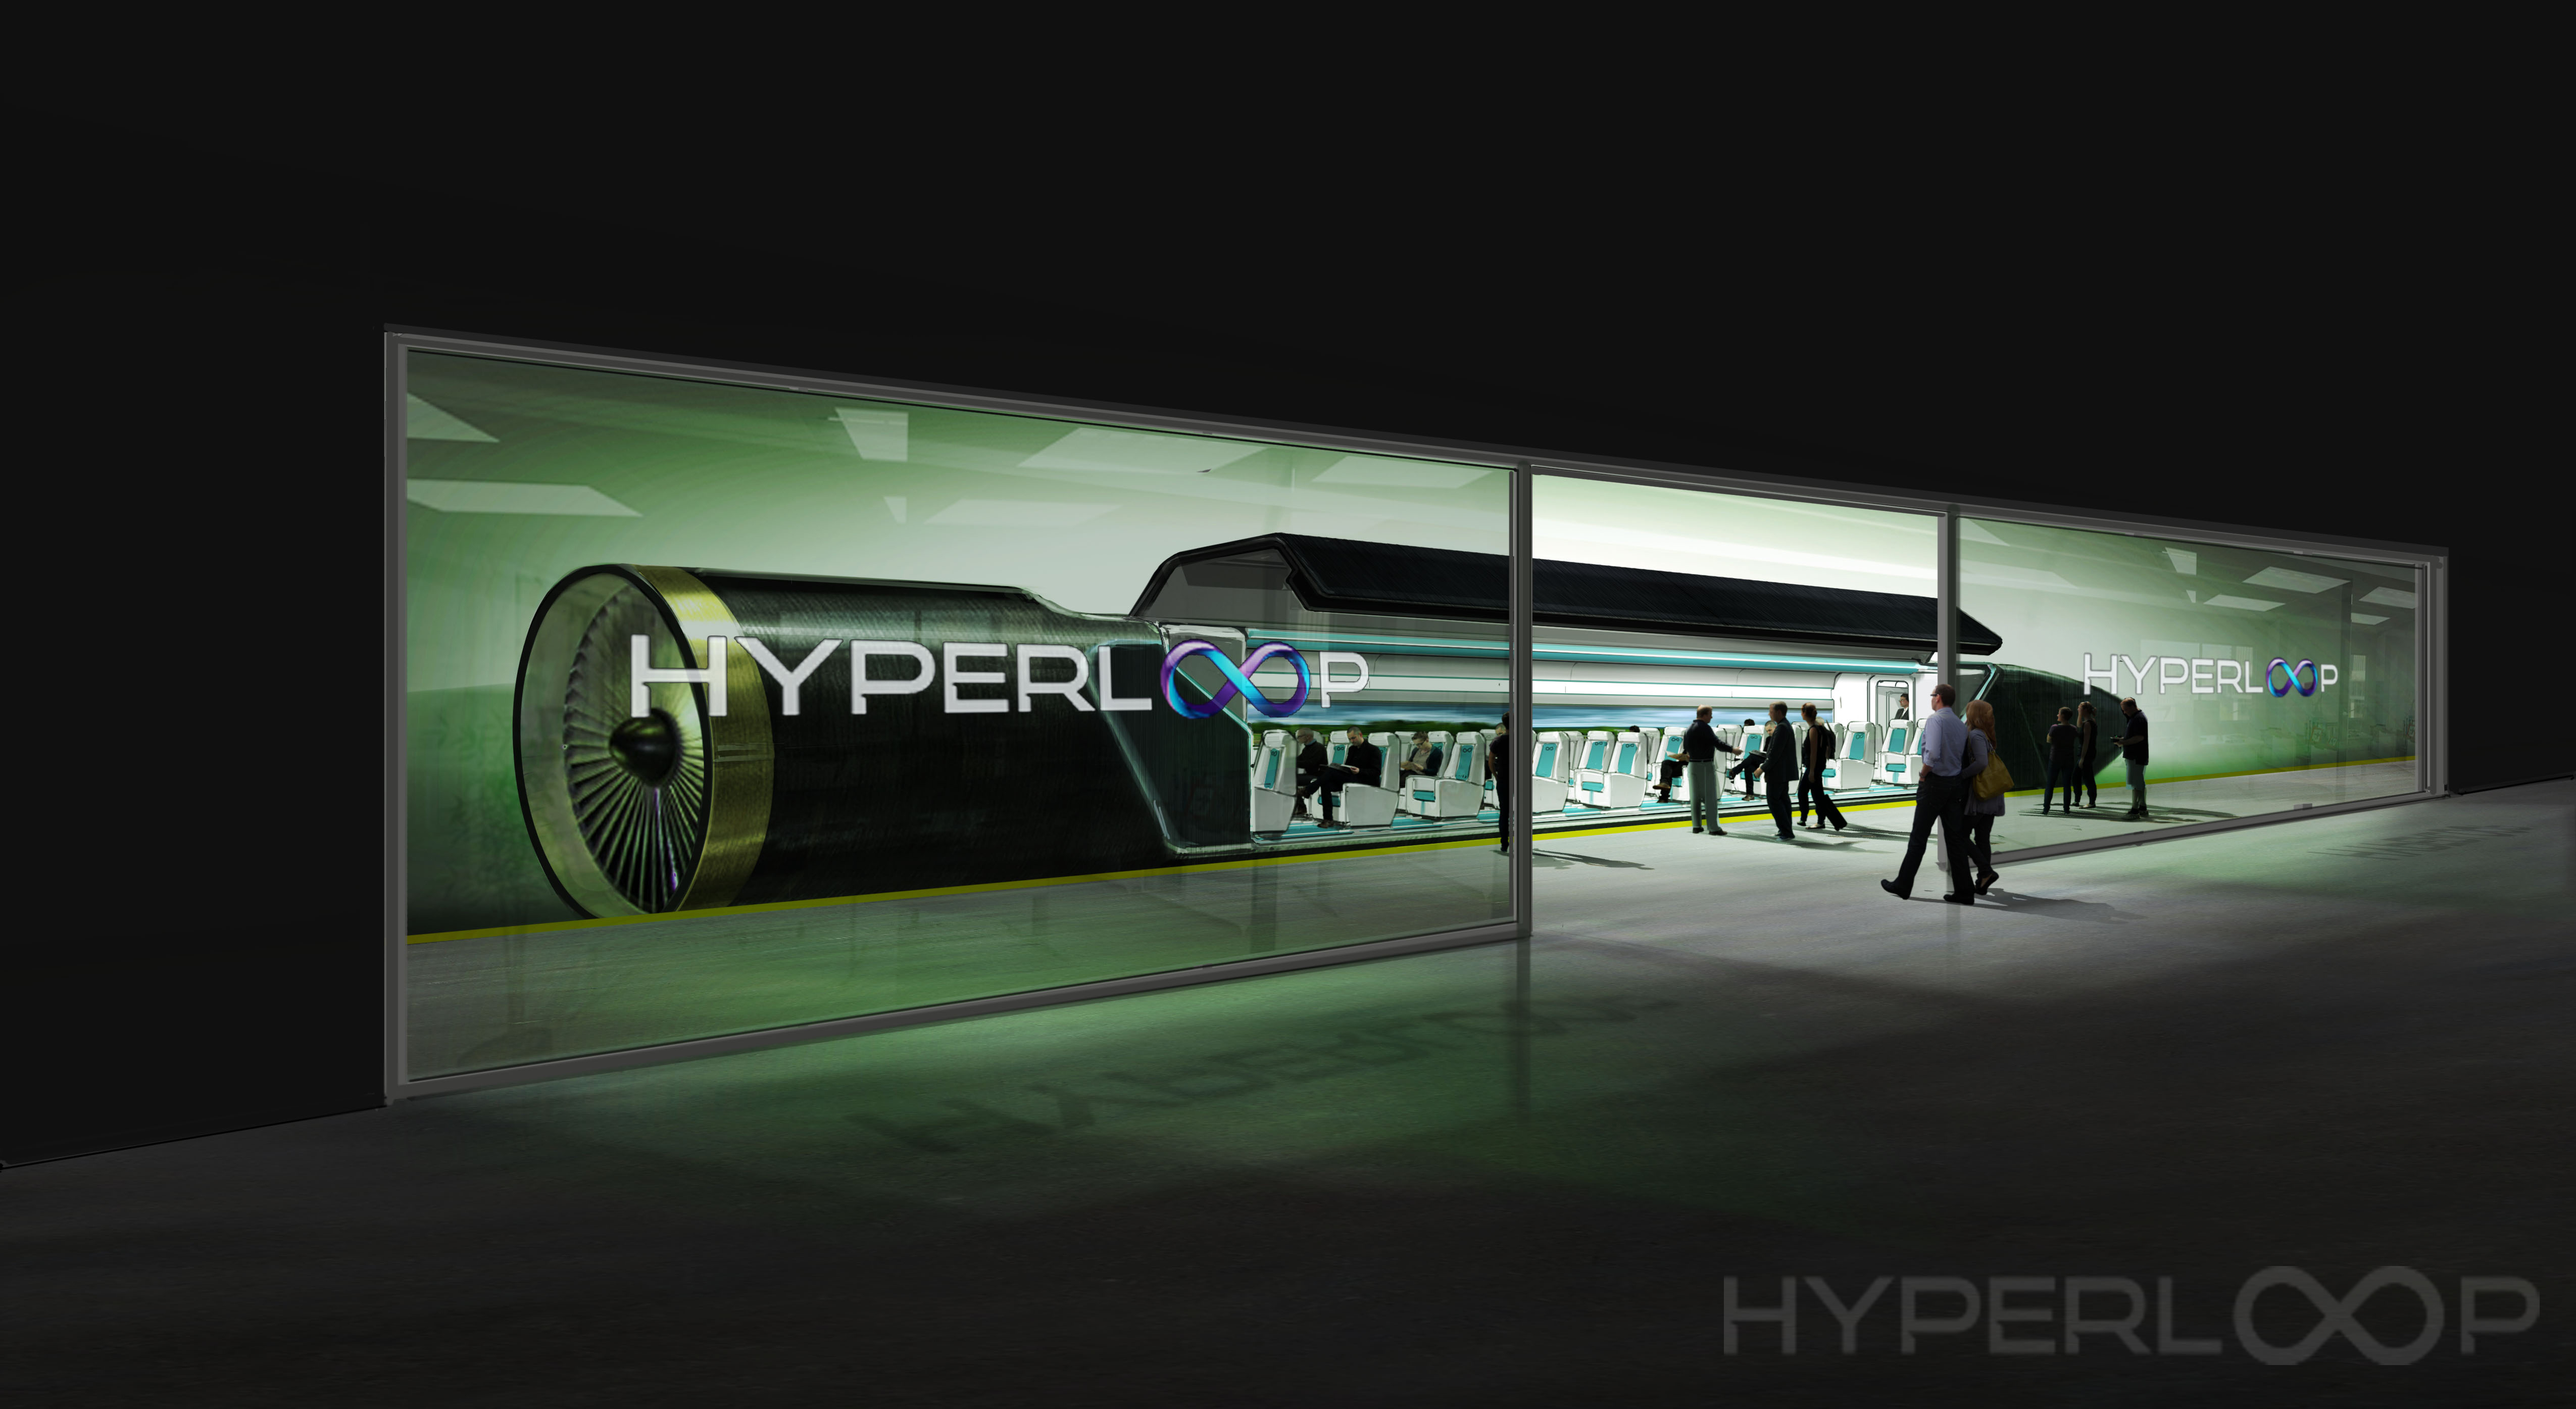 Hyperloop Station with Passengers Boarding